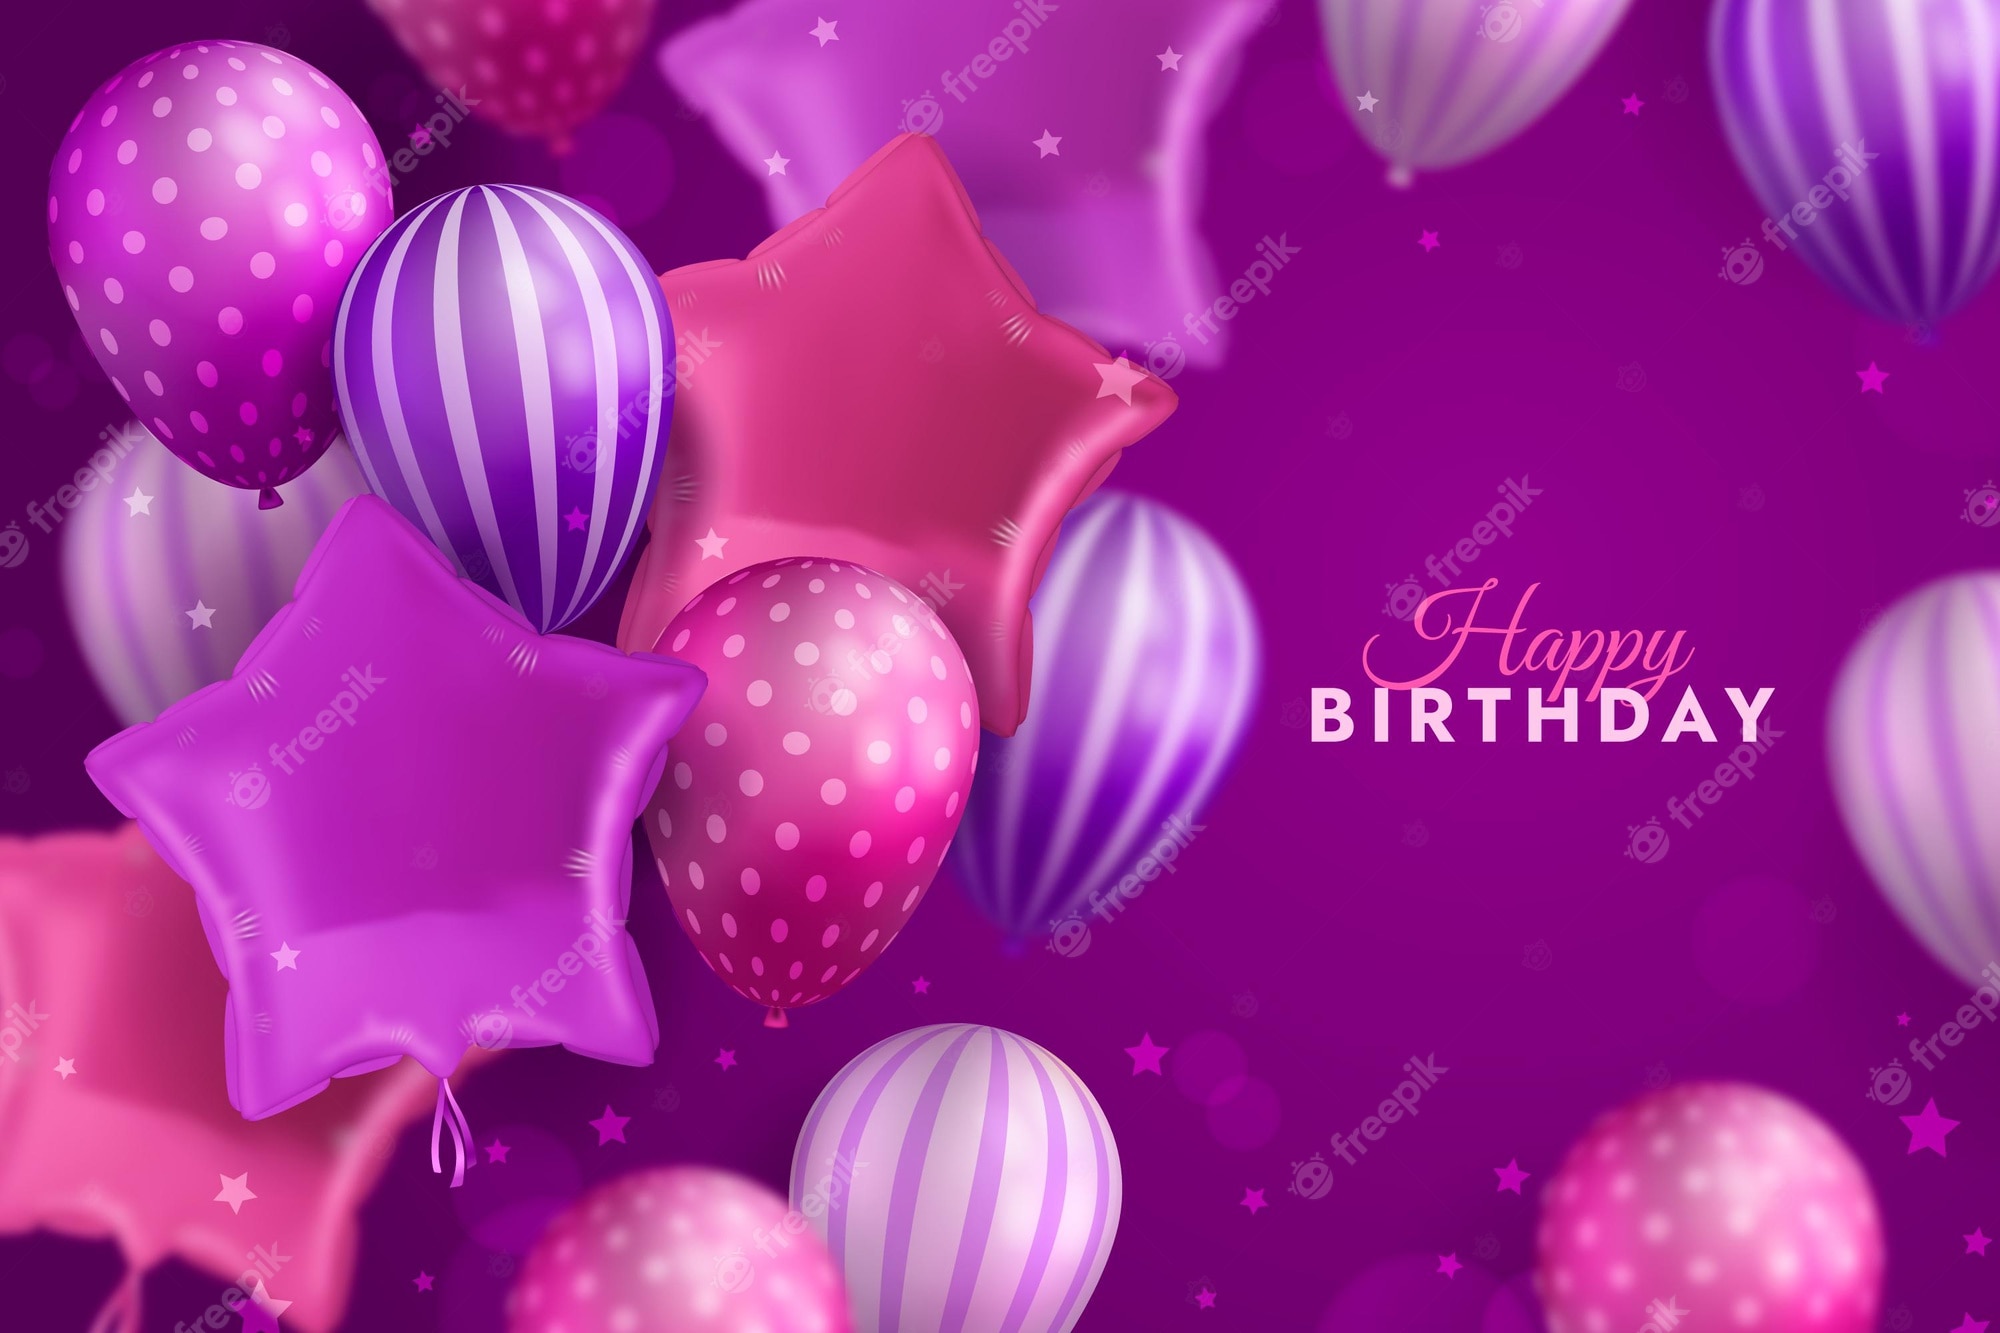 Purple Birthday Image